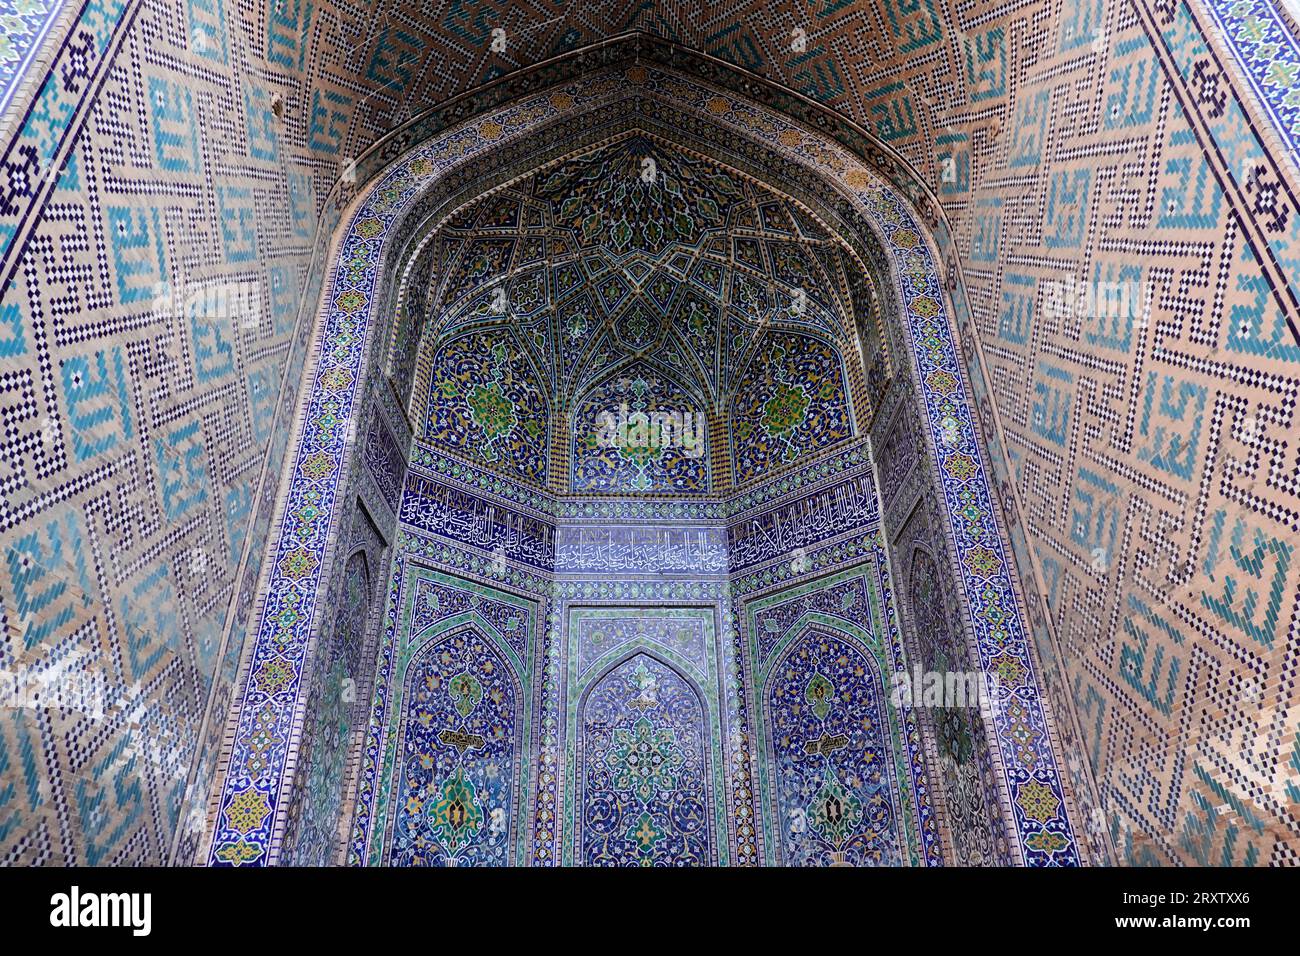 La mundialmente famosa arquitectura islámica de Samarcanda, Patrimonio de la Humanidad de la UNESCO, Uzbekistán, Asia Central, Asia Foto de stock